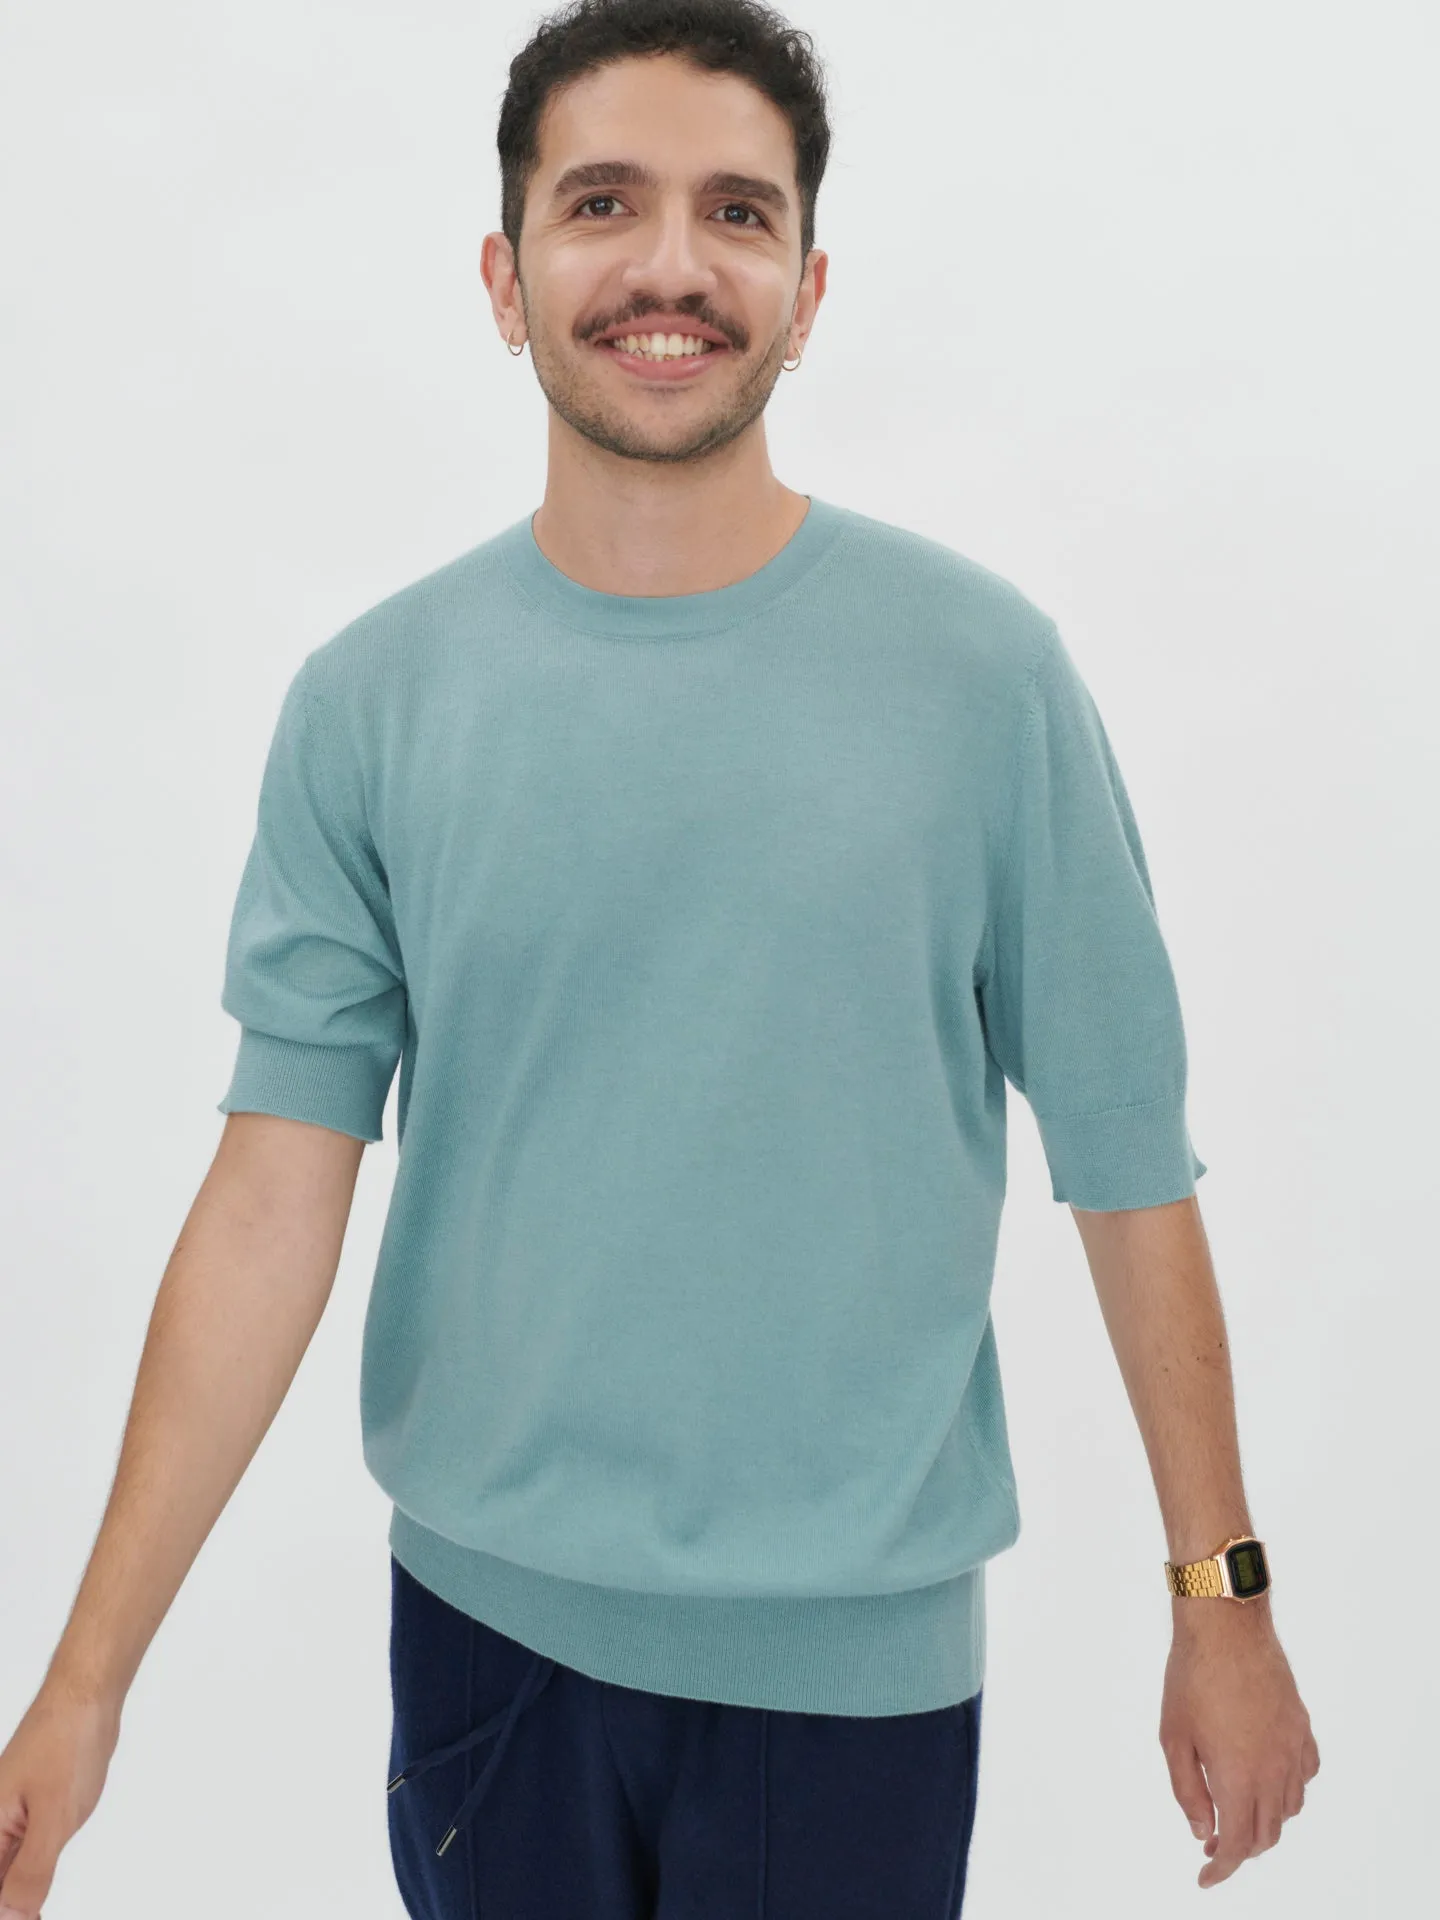 Men's Silk Cashmere T-Shirt slate - Gobi Cashmere